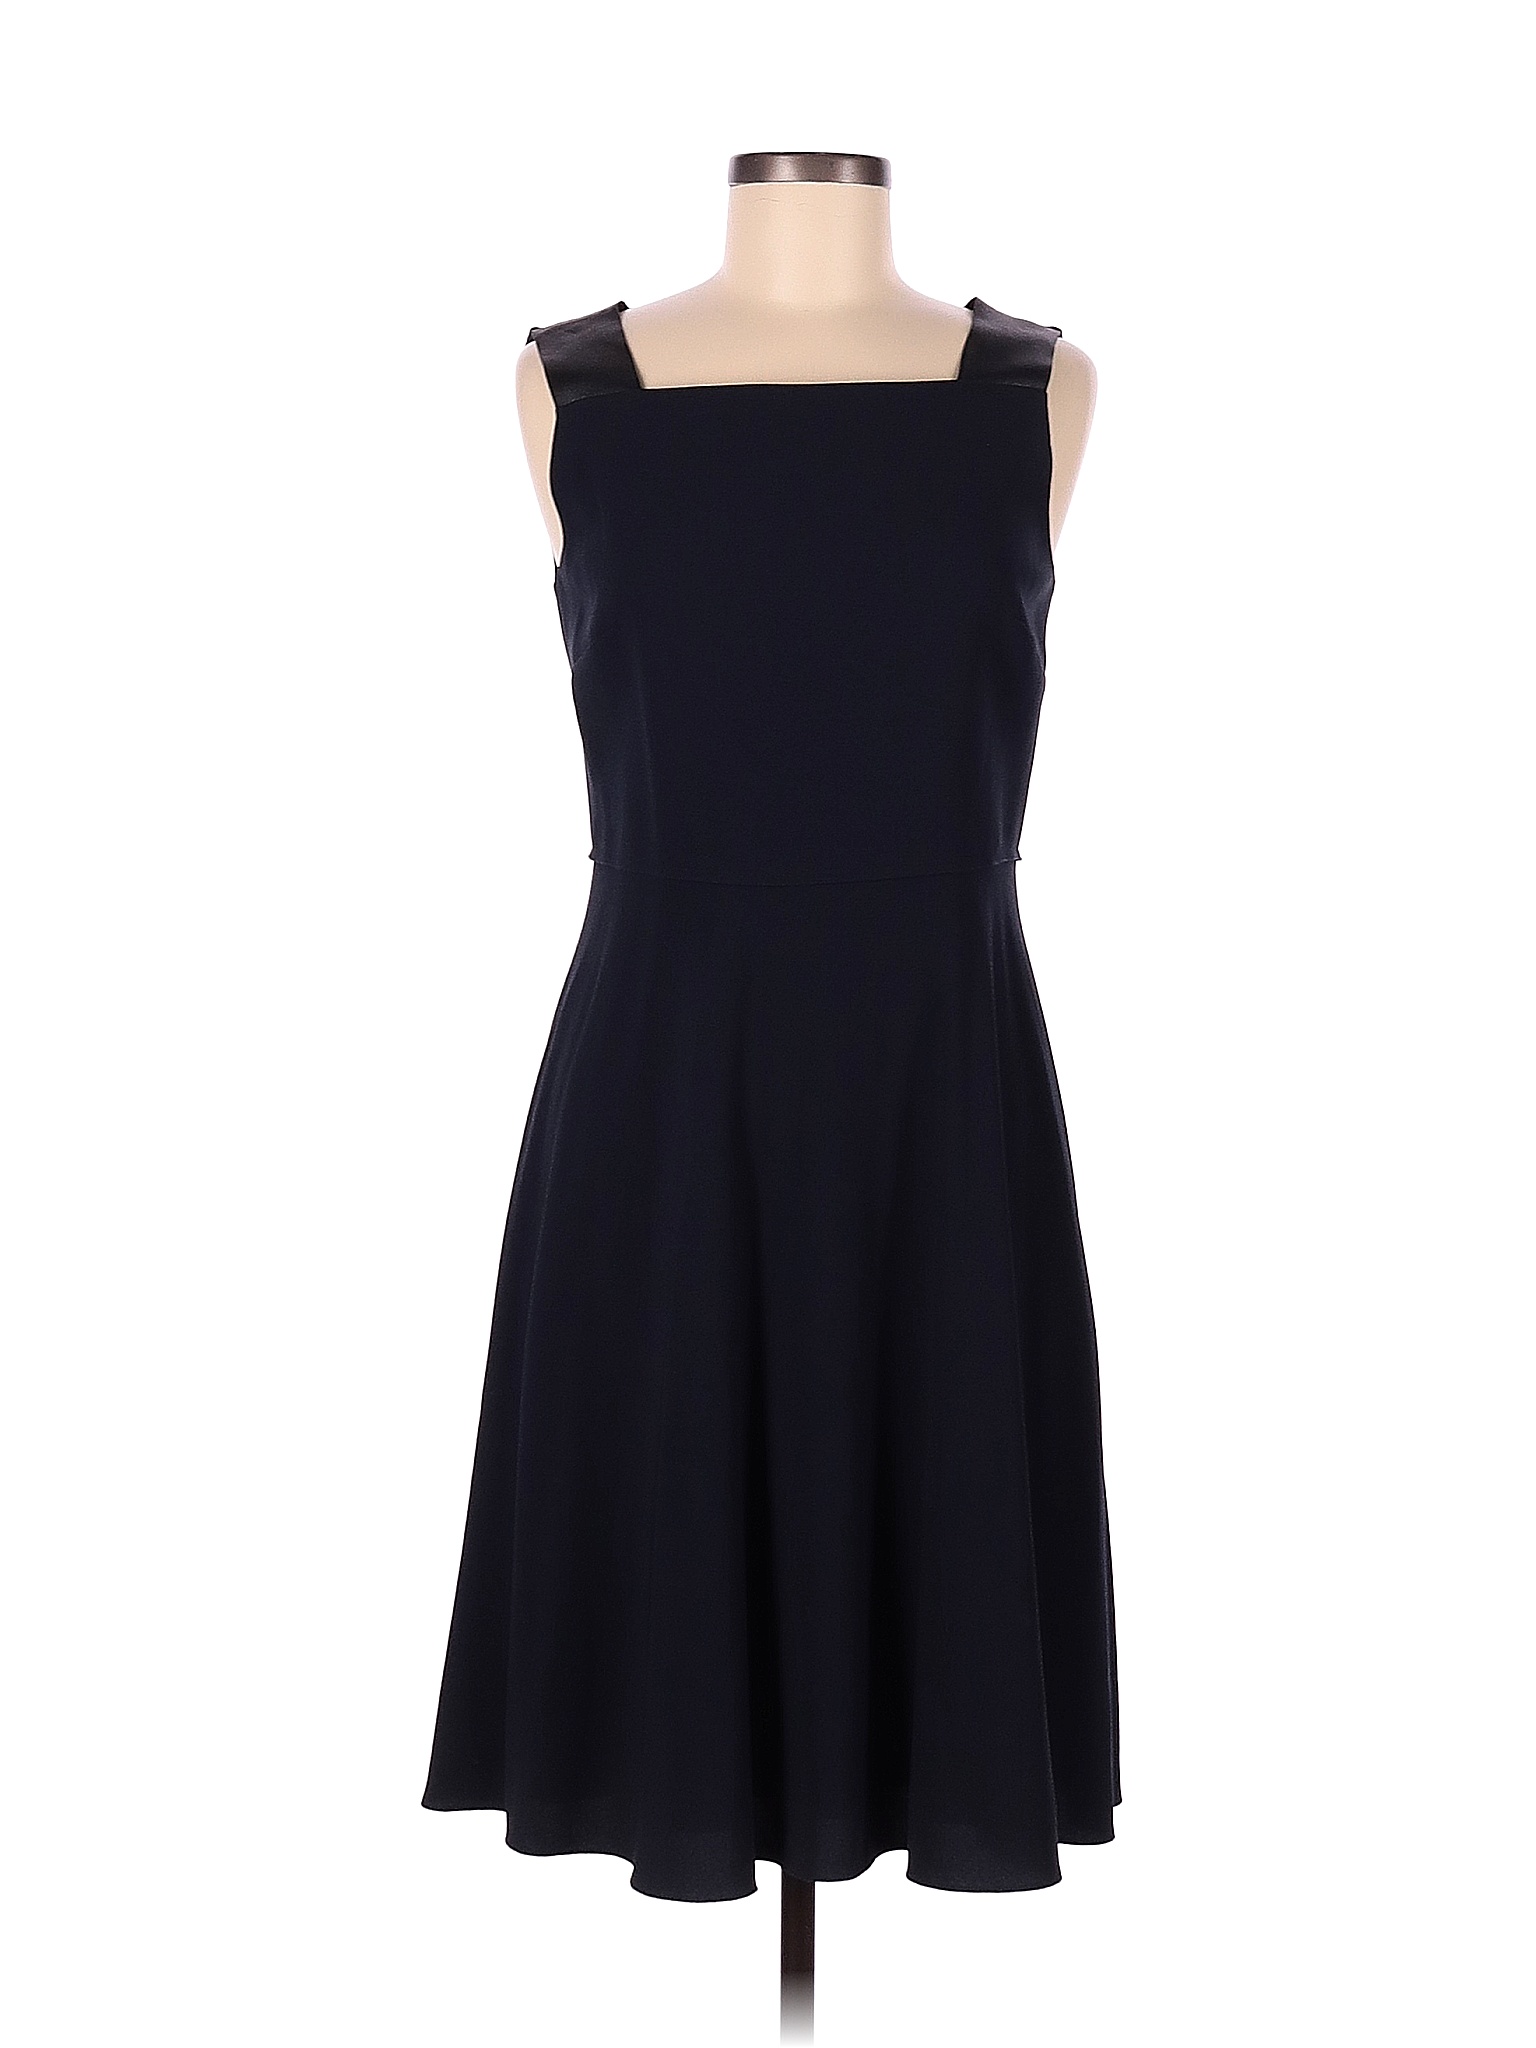 Elie Tahari Solid Navy Blue Casual Dress Size 6 - 88% off | thredUP